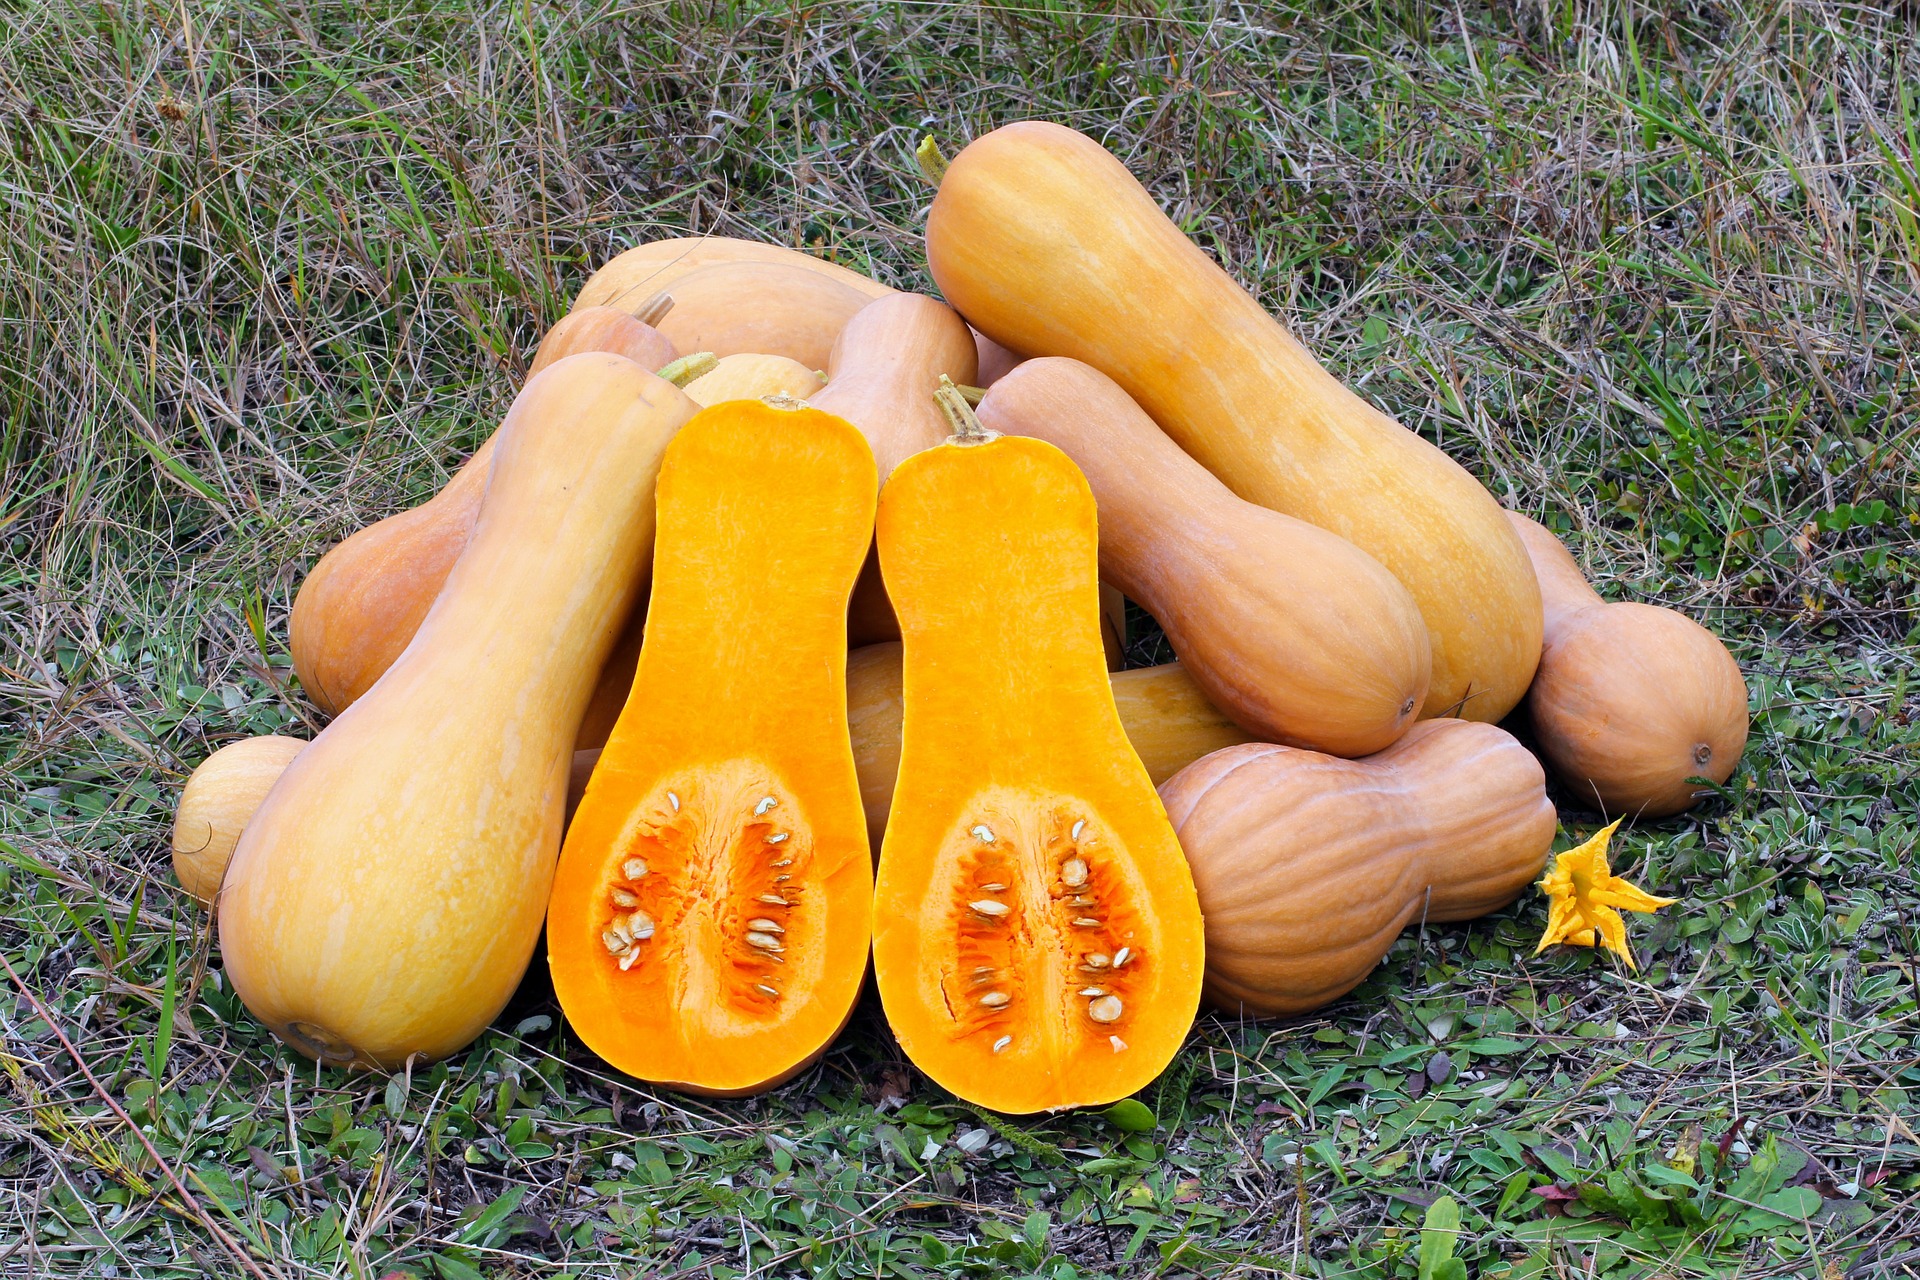 https://pixabay.com/en/butternut-squash-produce-gourd-109131/